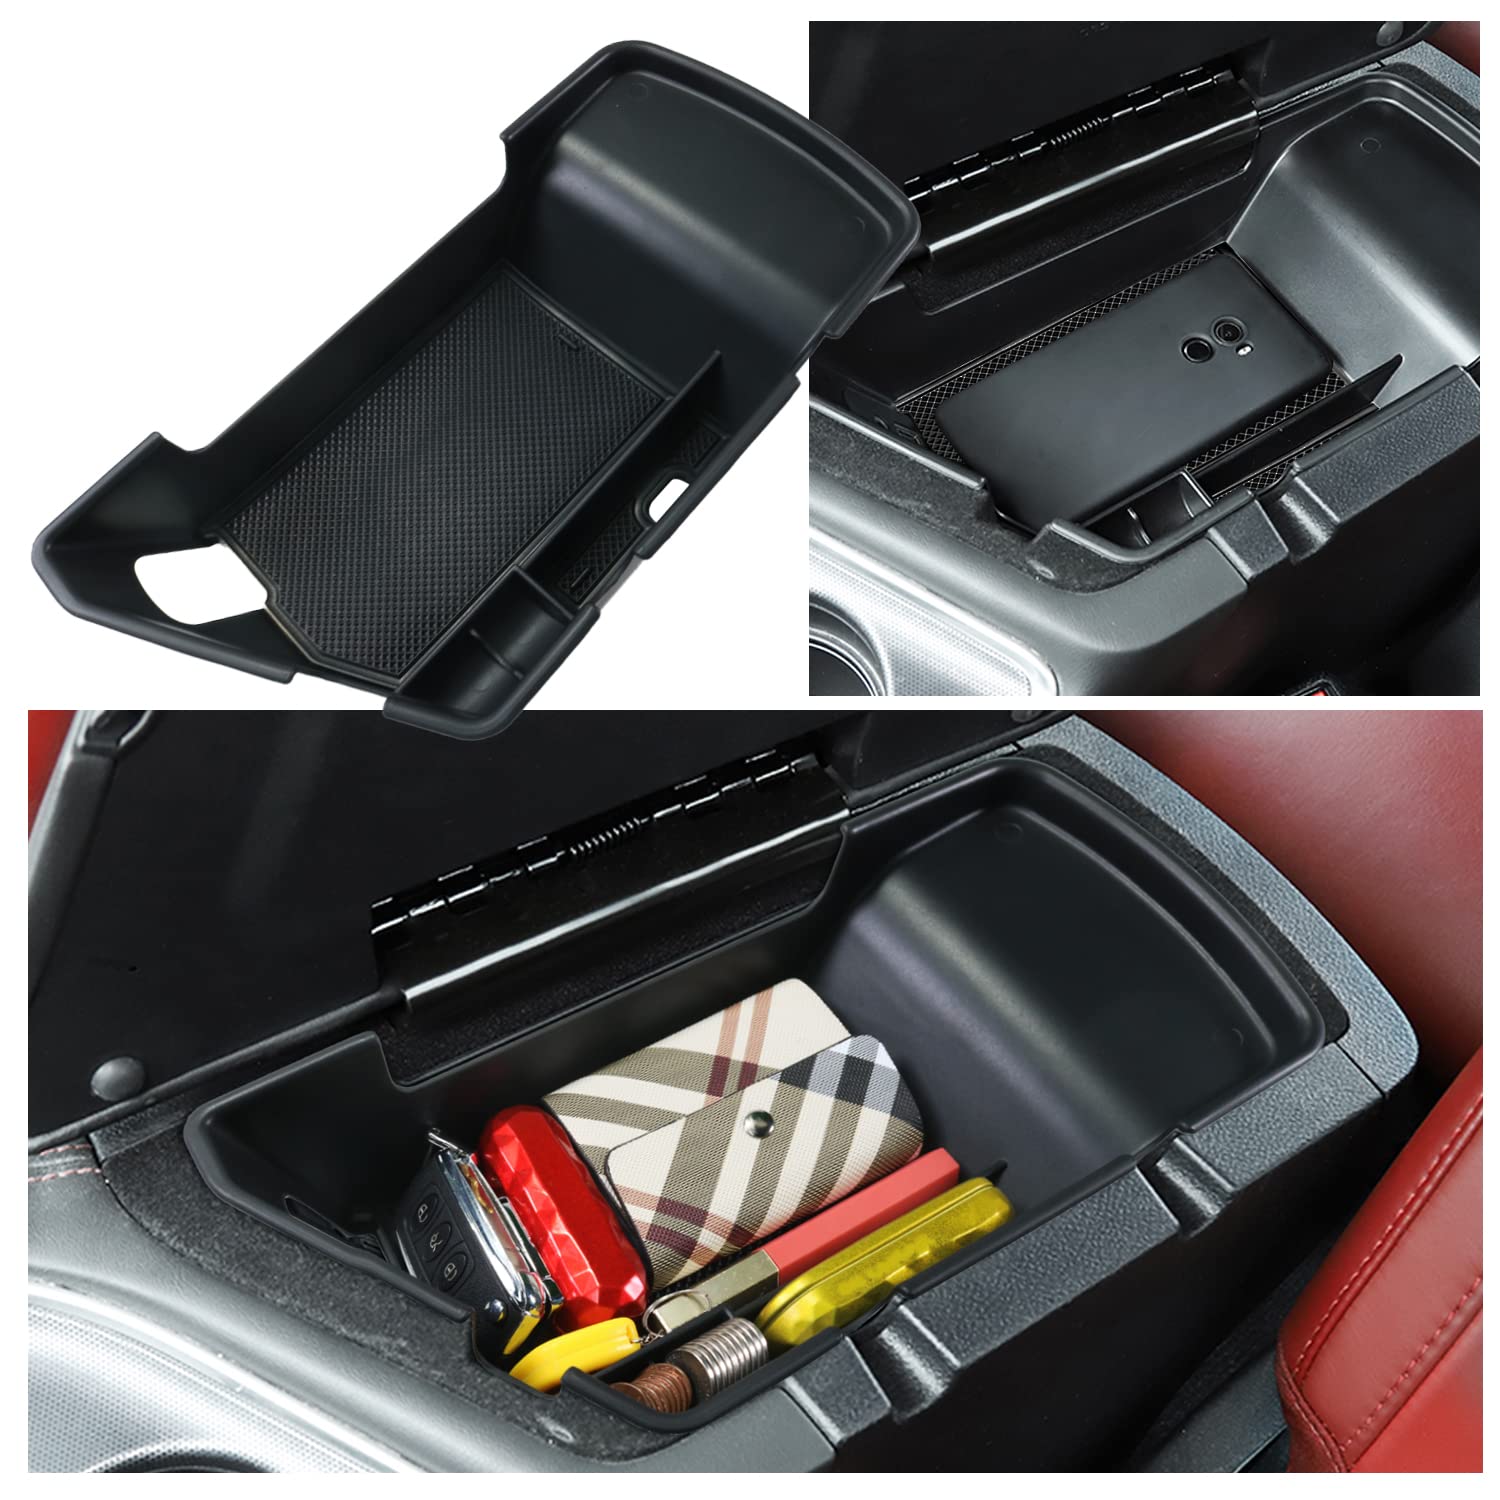 Dodge Challenger Center Console Organizer Tray 2015-2019 - LFOTPP Car Accessories